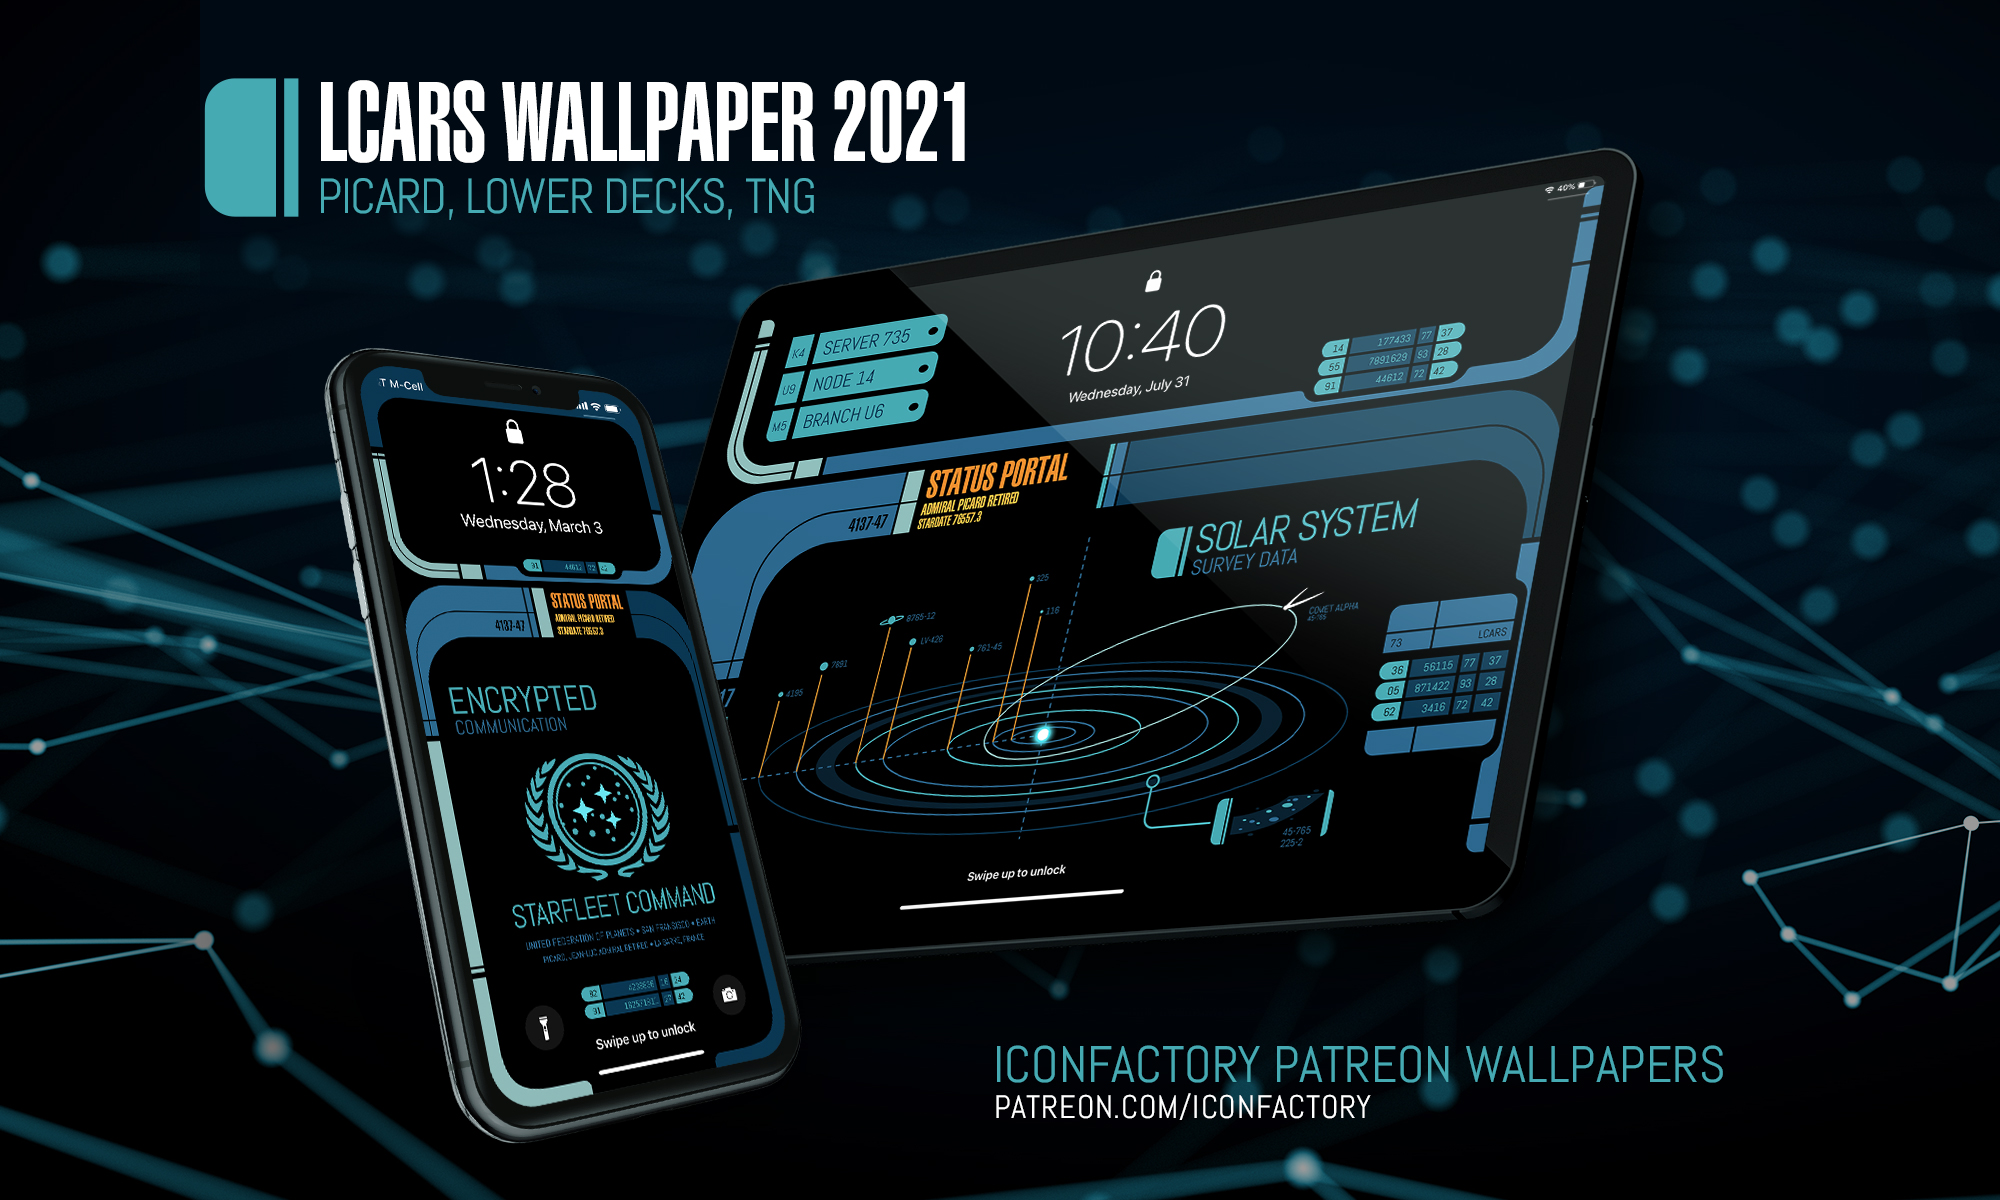 iPhone lock screen showing the Star Trek LCARS 2021 wallpaper